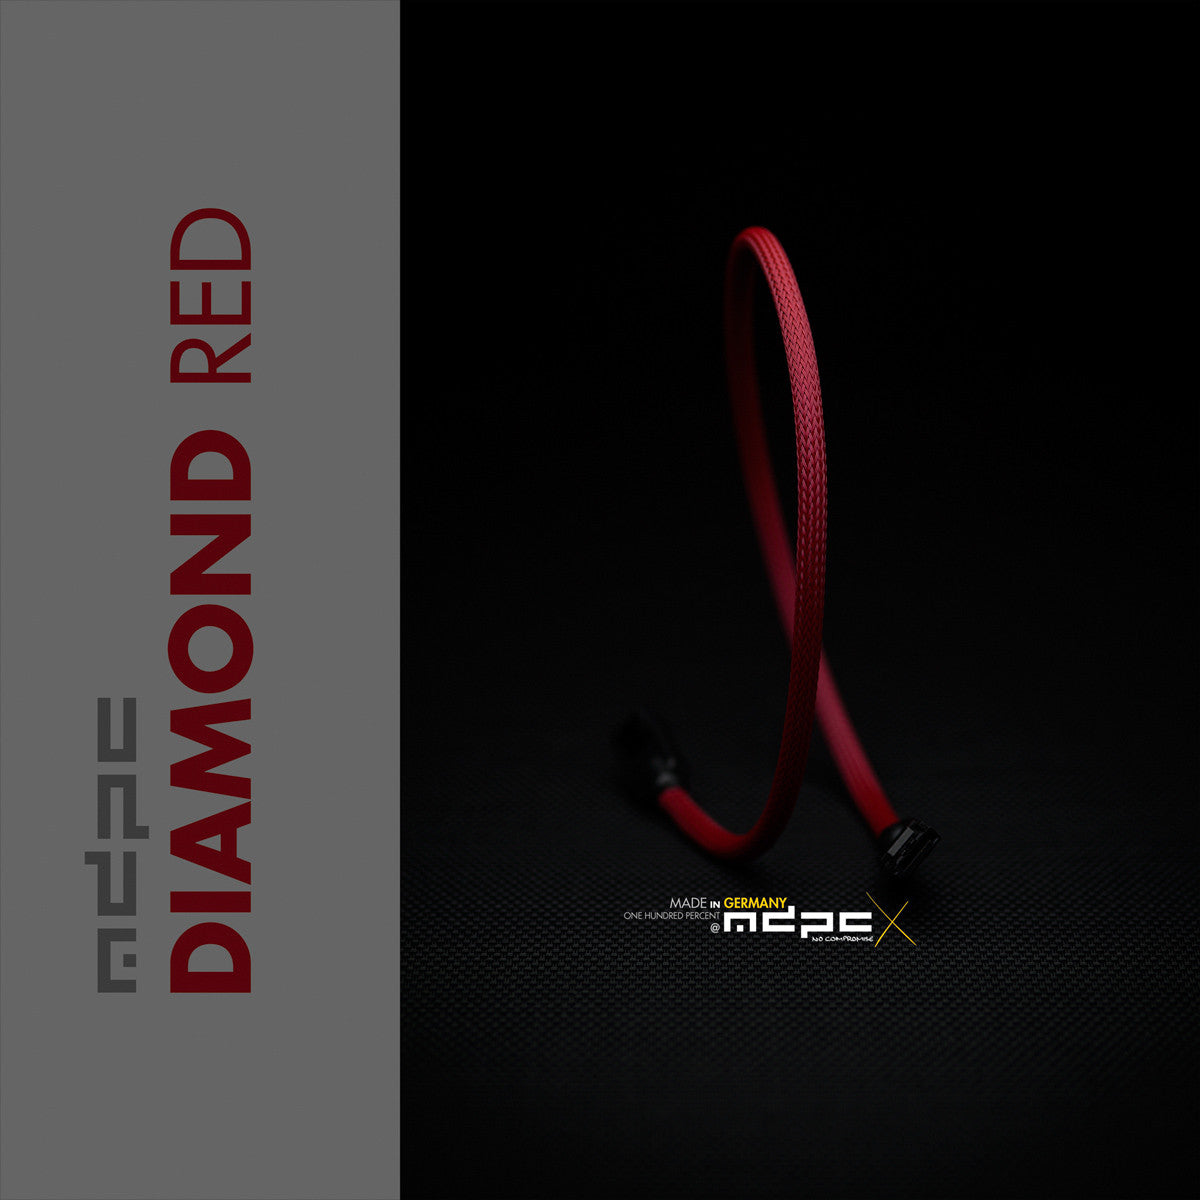 MDPC-X Diamond Red SATA - Pexon PCs 